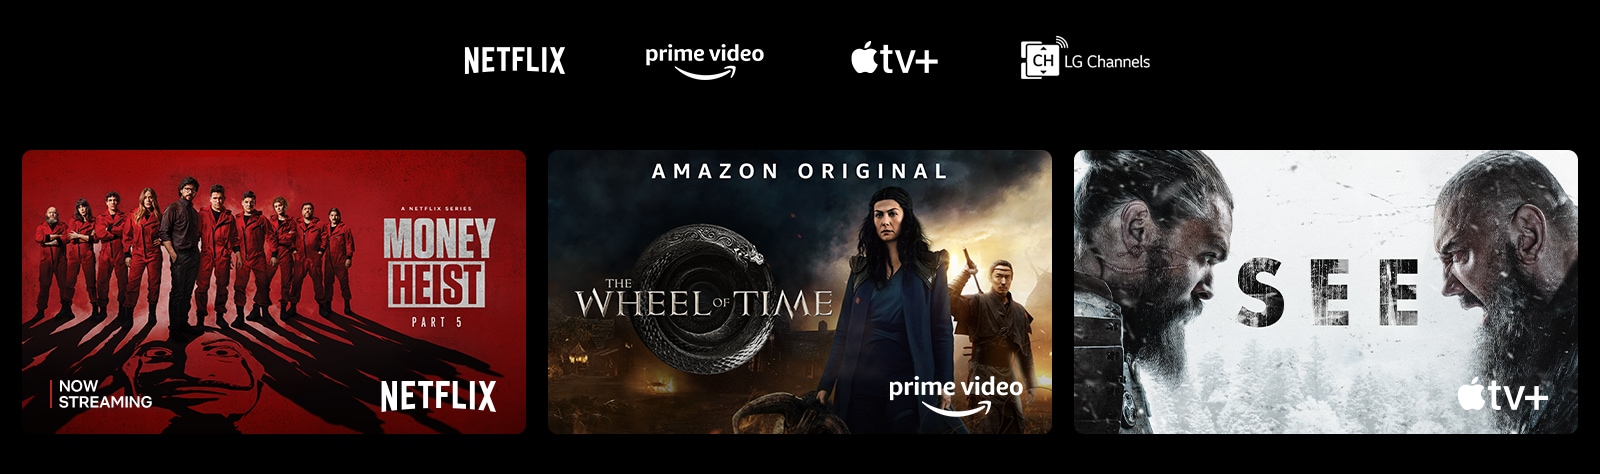 Netflix Money Heist Poster, Prime Video Time Wheel, Watch on Apple TV Plus.